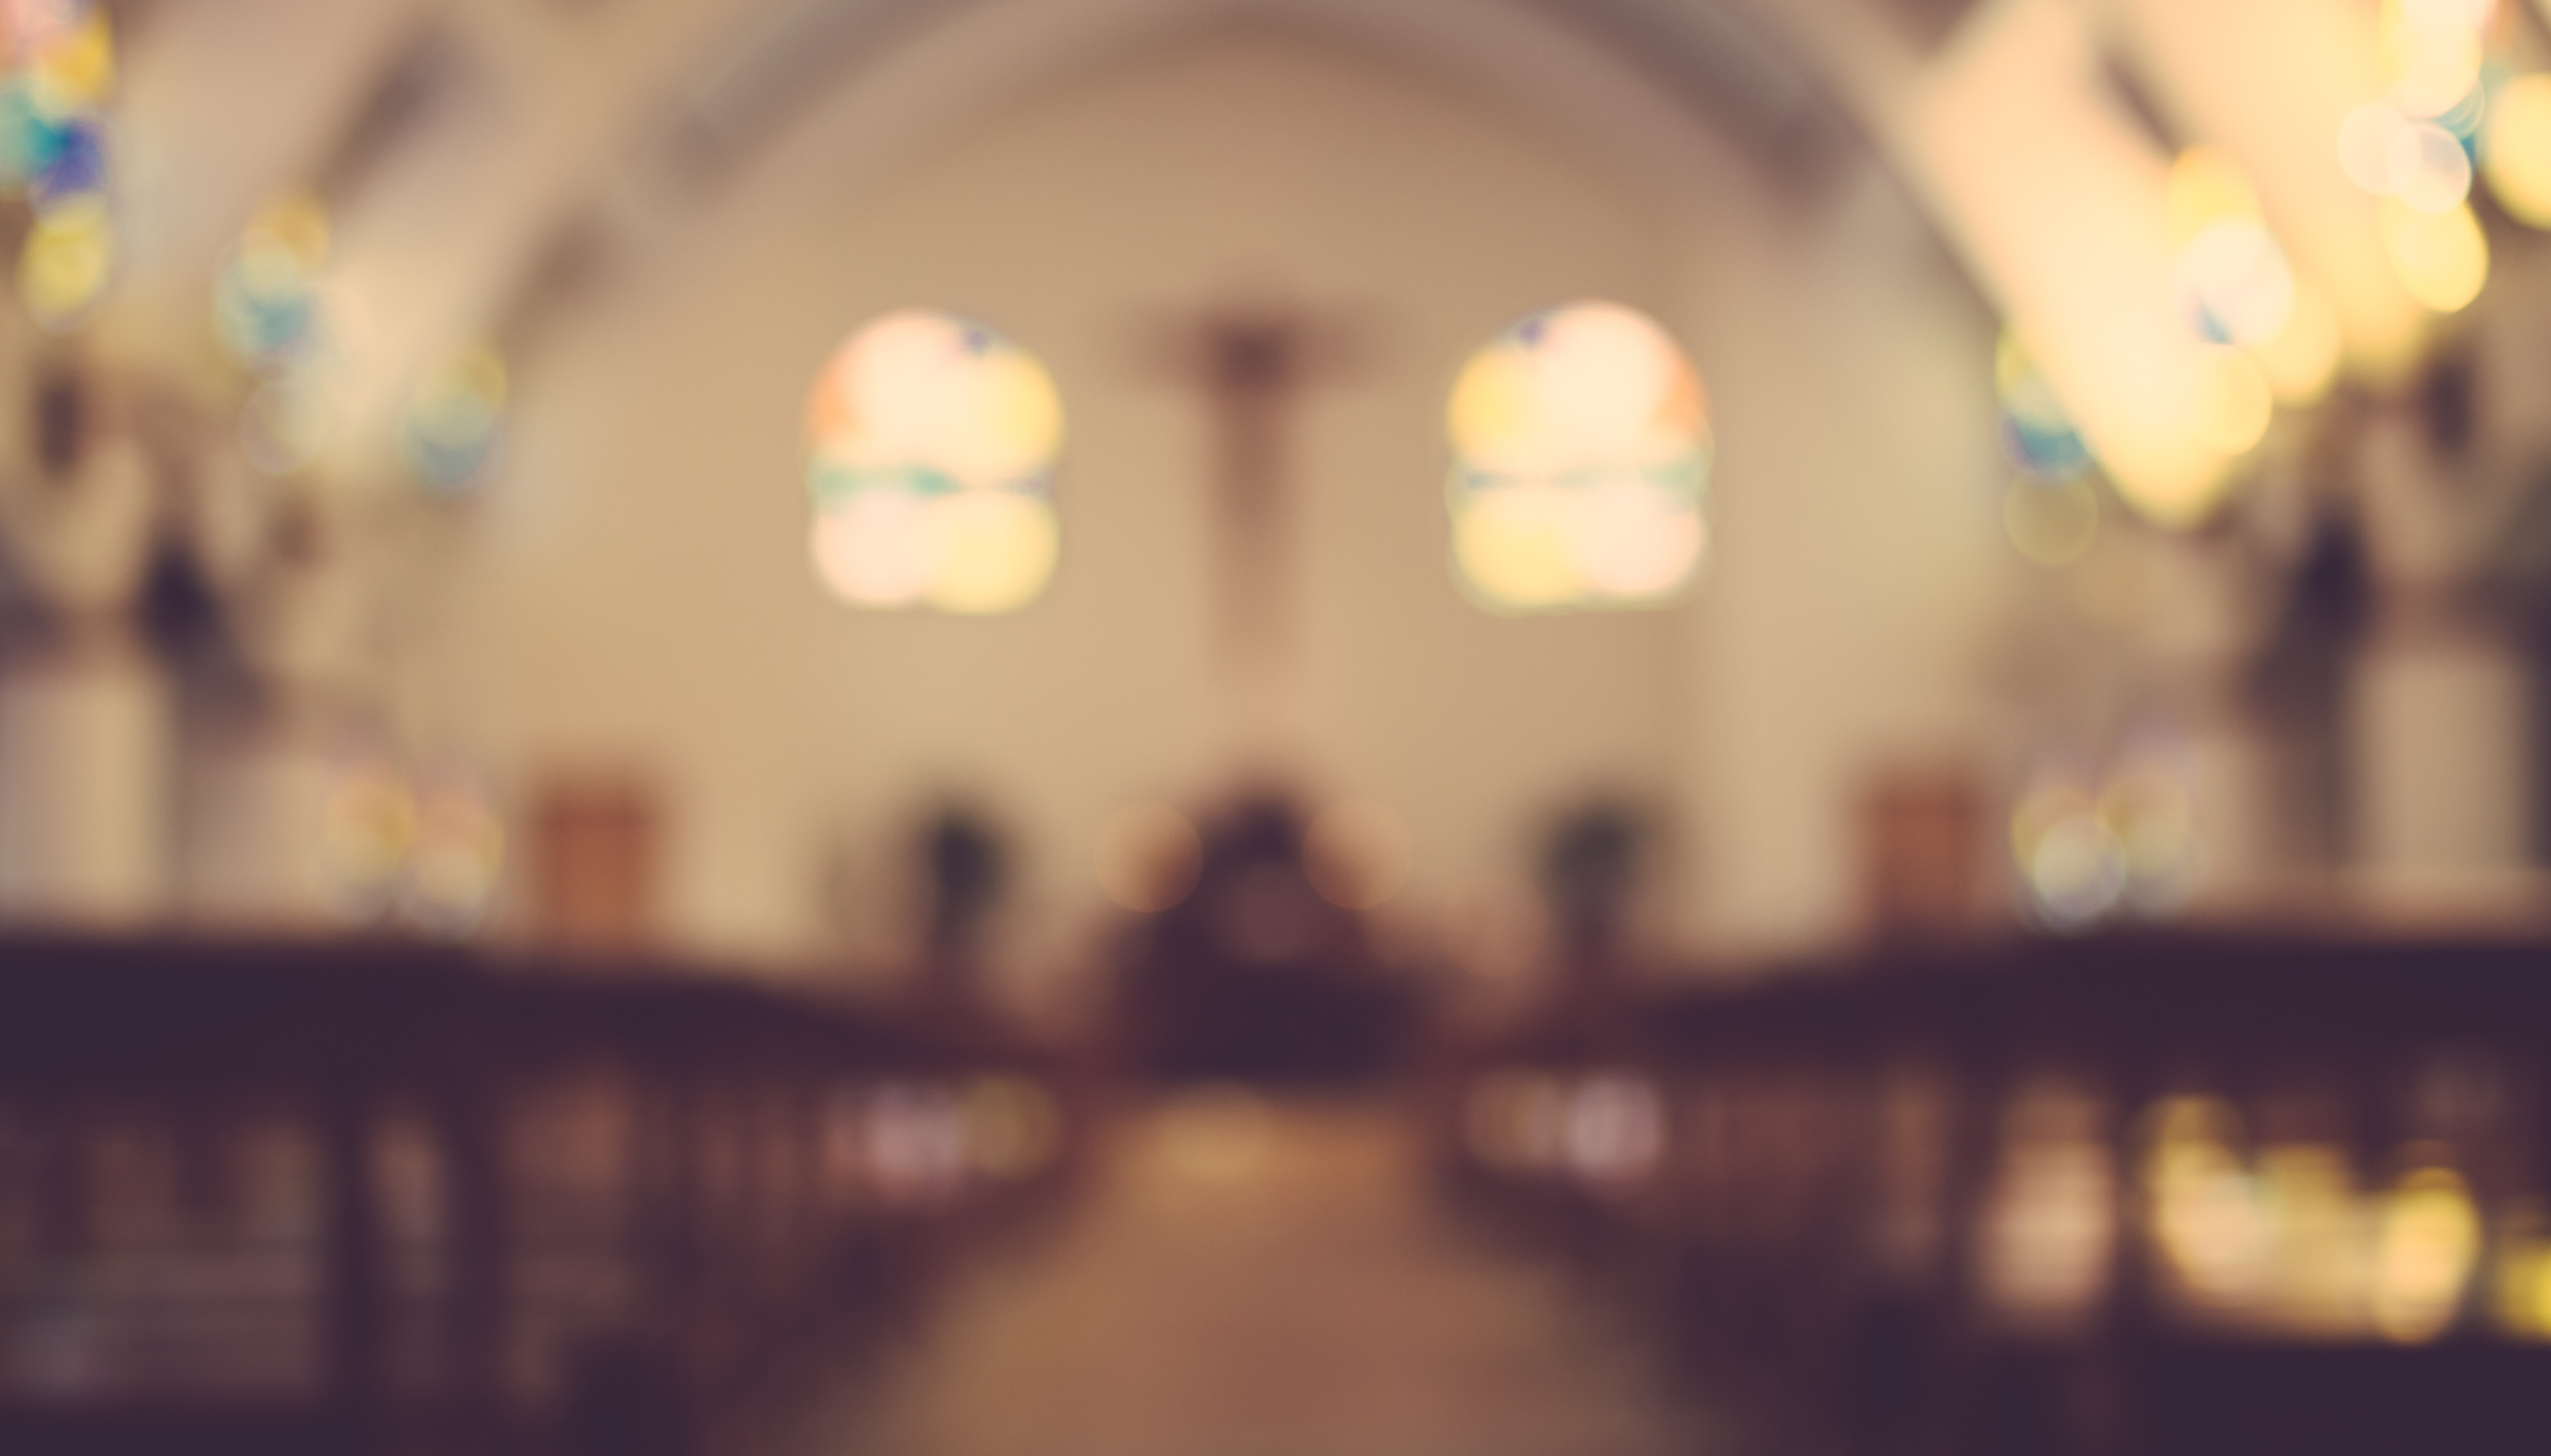 Blurred photo of church interior